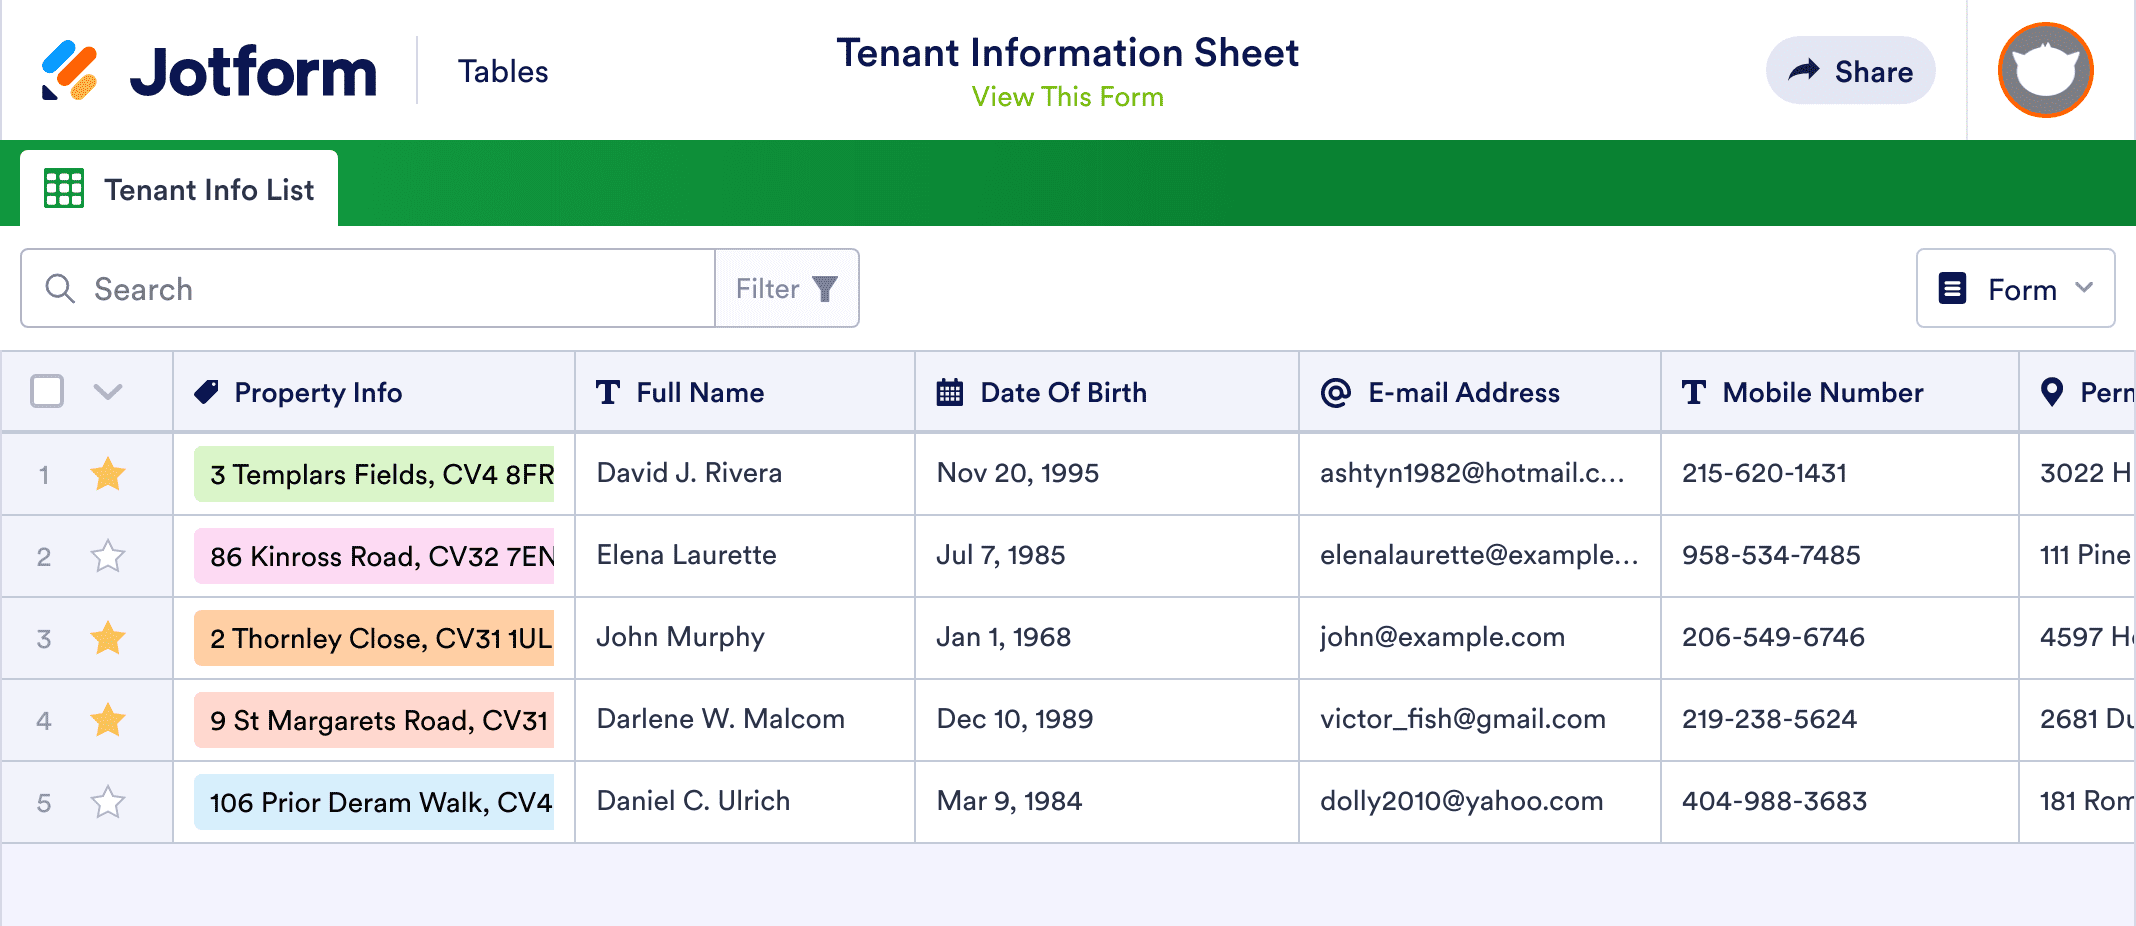 Tenant Information Sheet